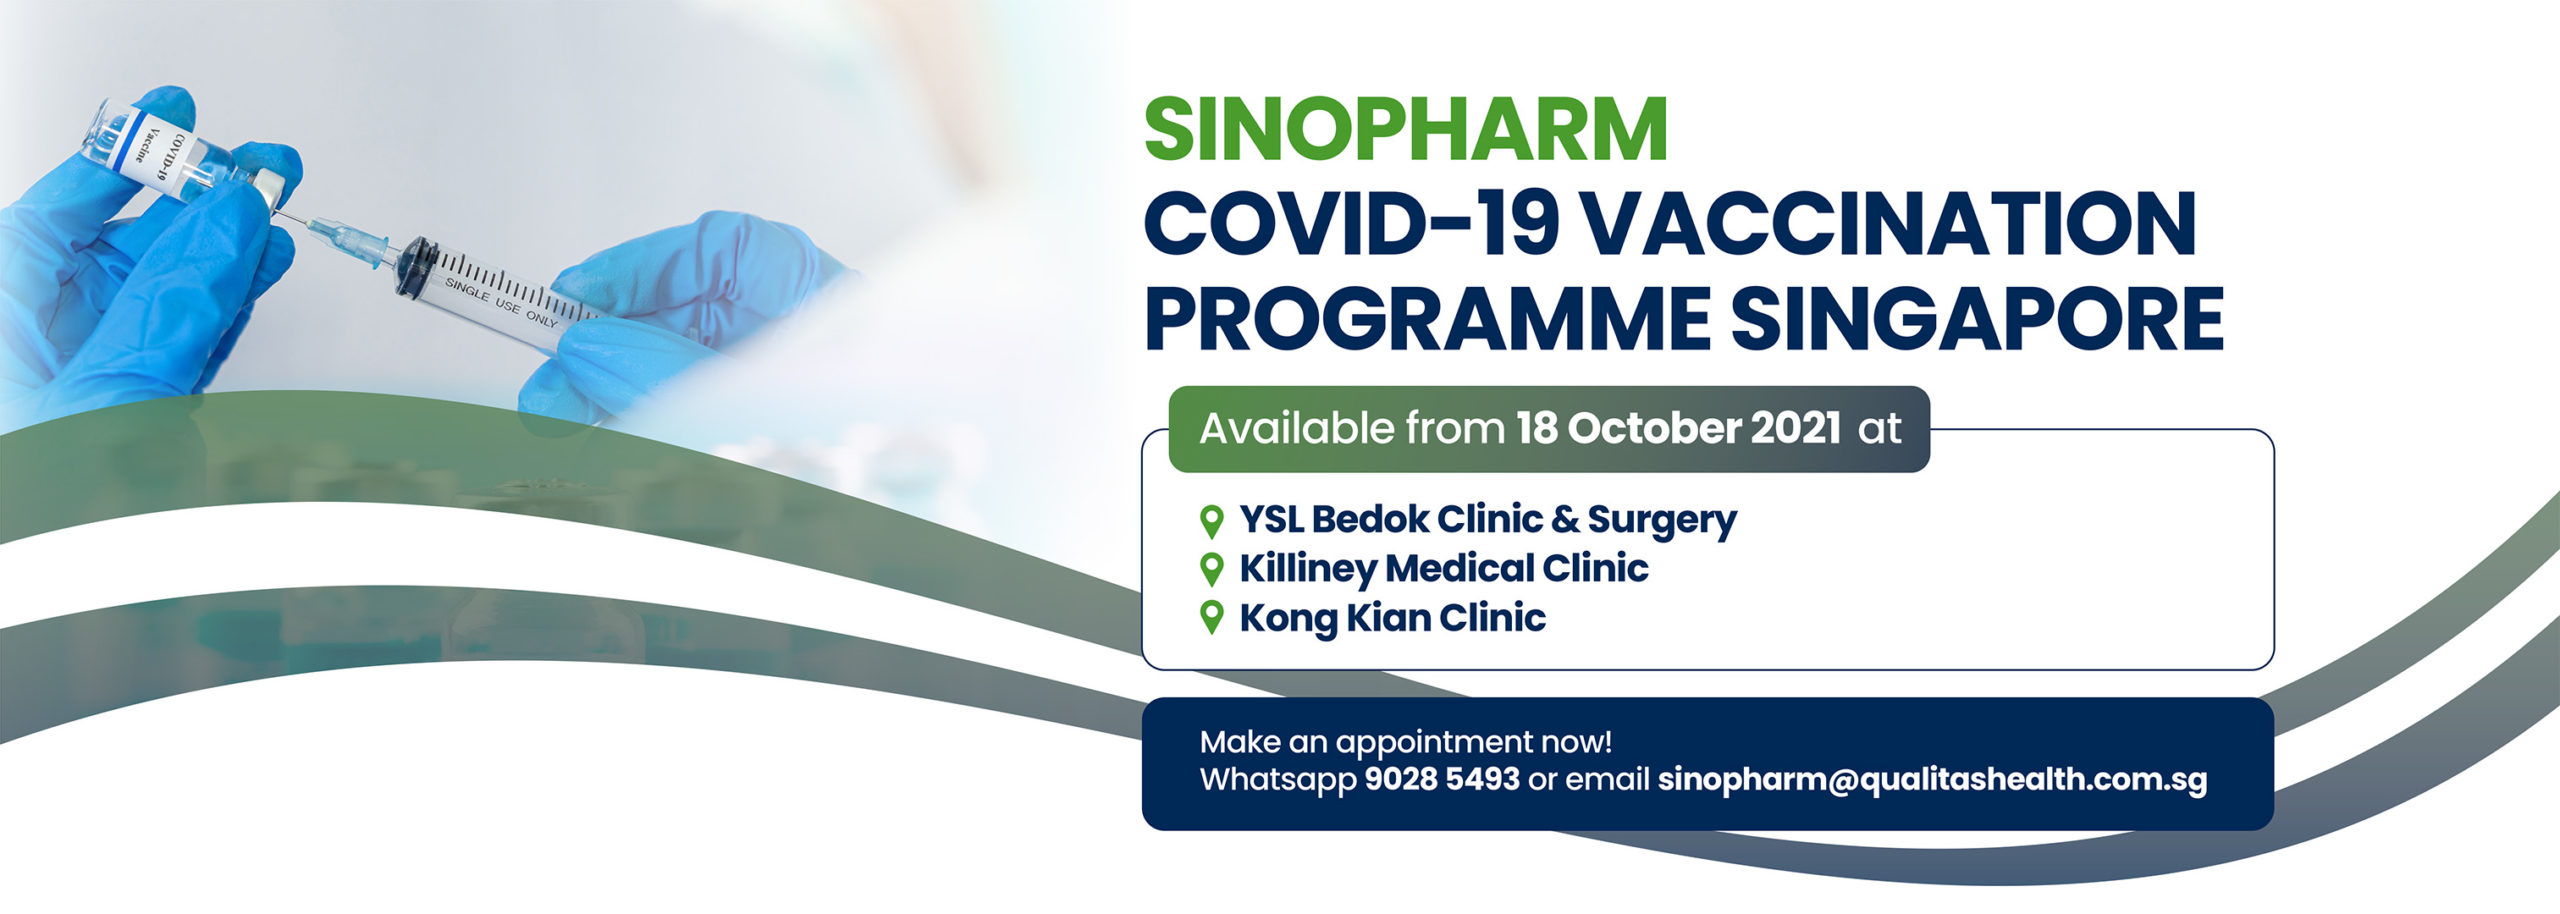 Covid-19 Vaccination Programme Singapore